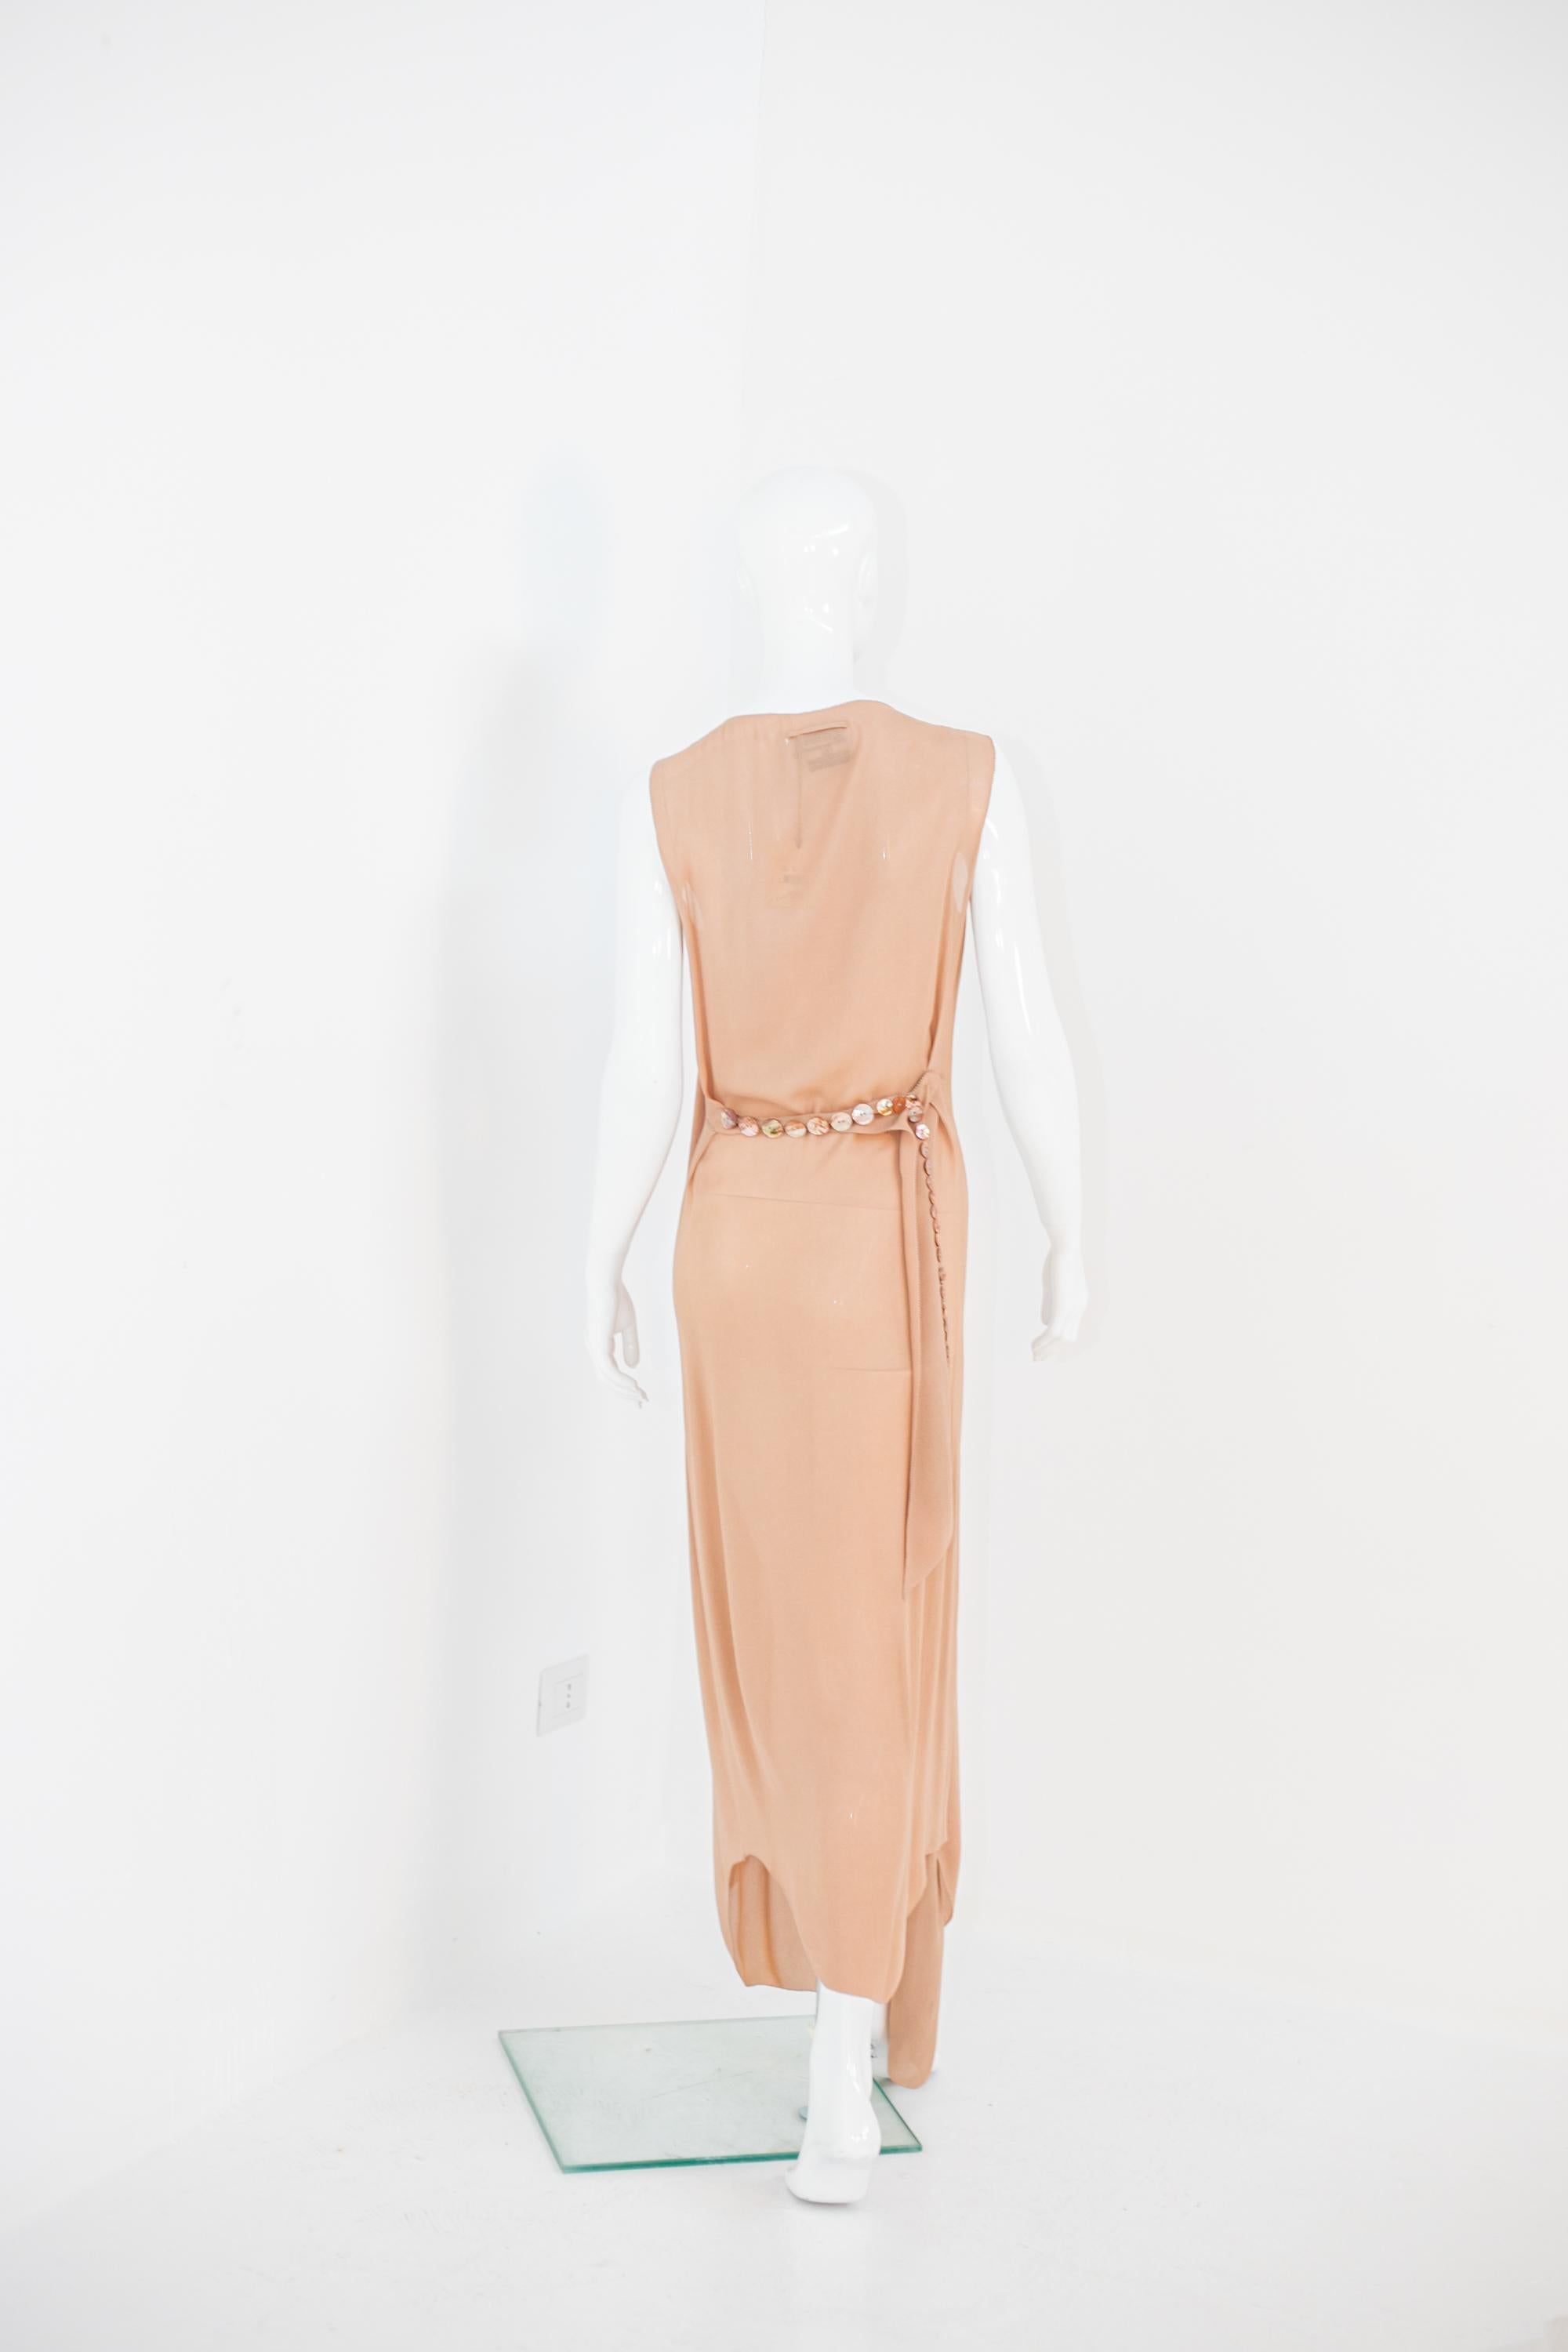 Jean Paul Gaultier Rare Evening Dress with Decorative Jewels For Sale 3